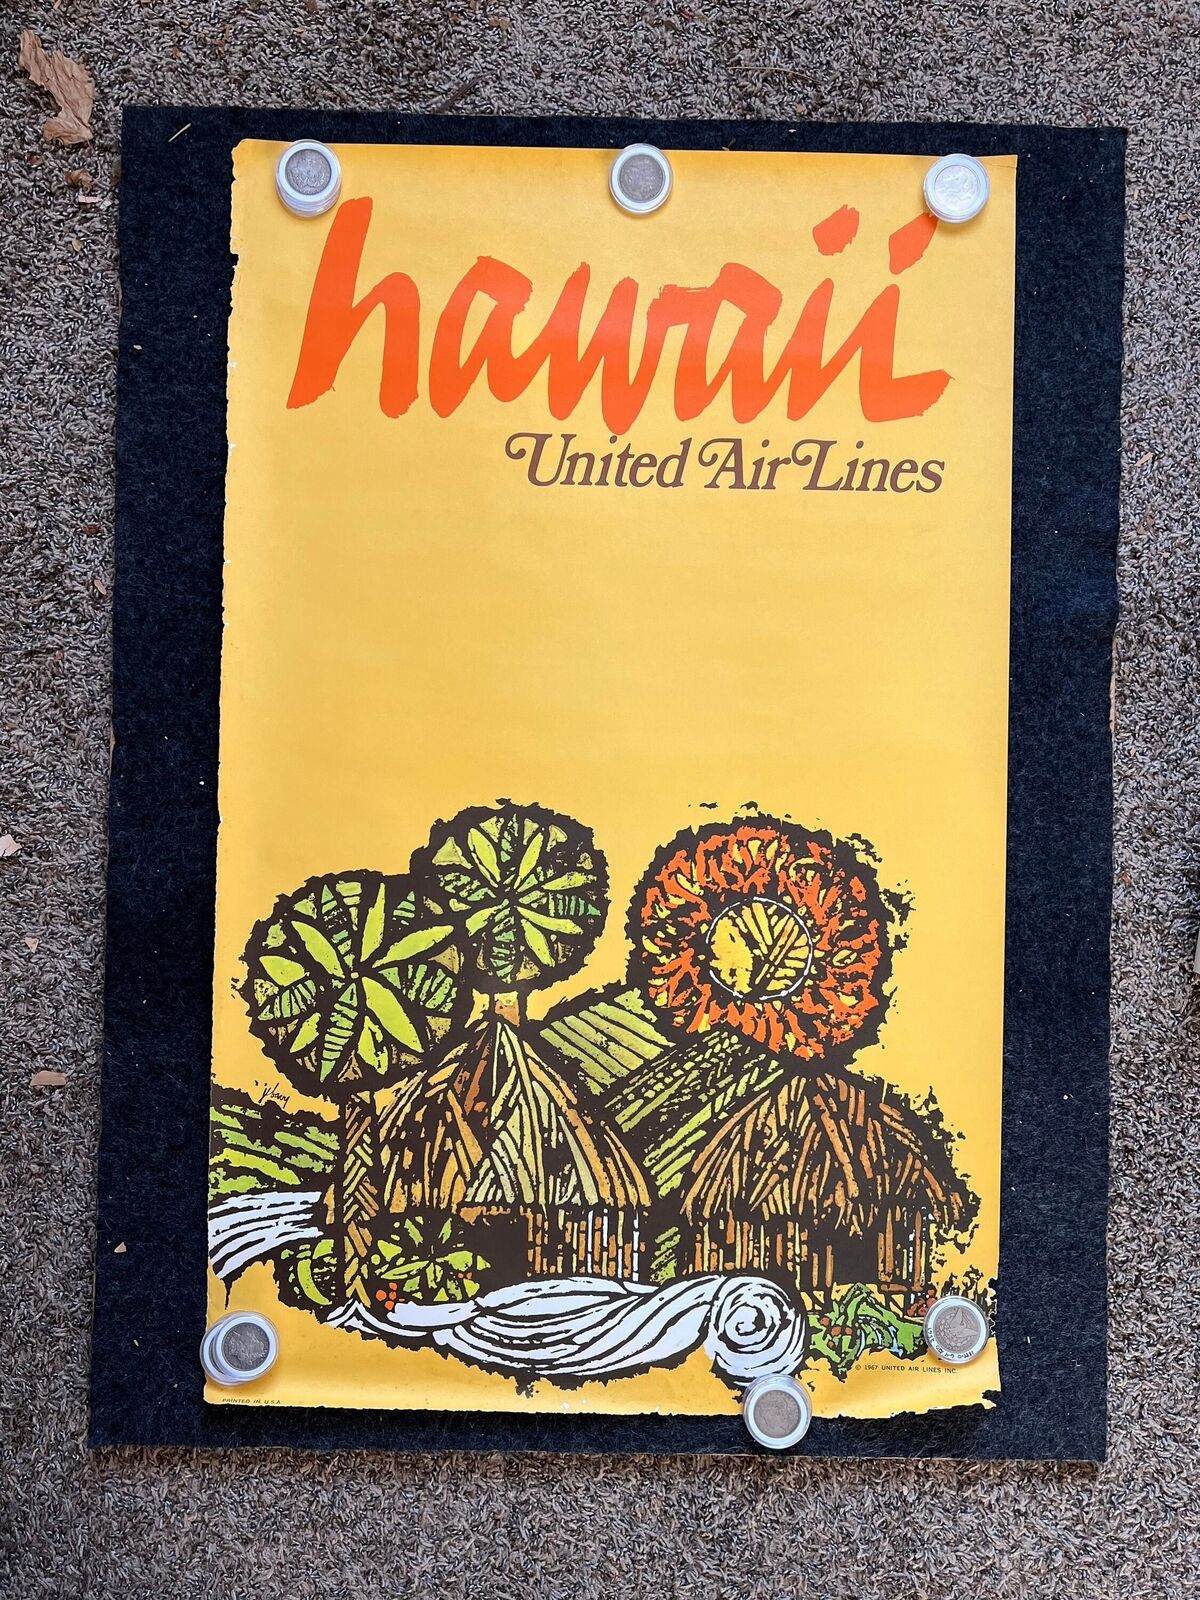 1967 Hawaiian United Air Lines Vintage Travel Poster, Original Travel Poster, V